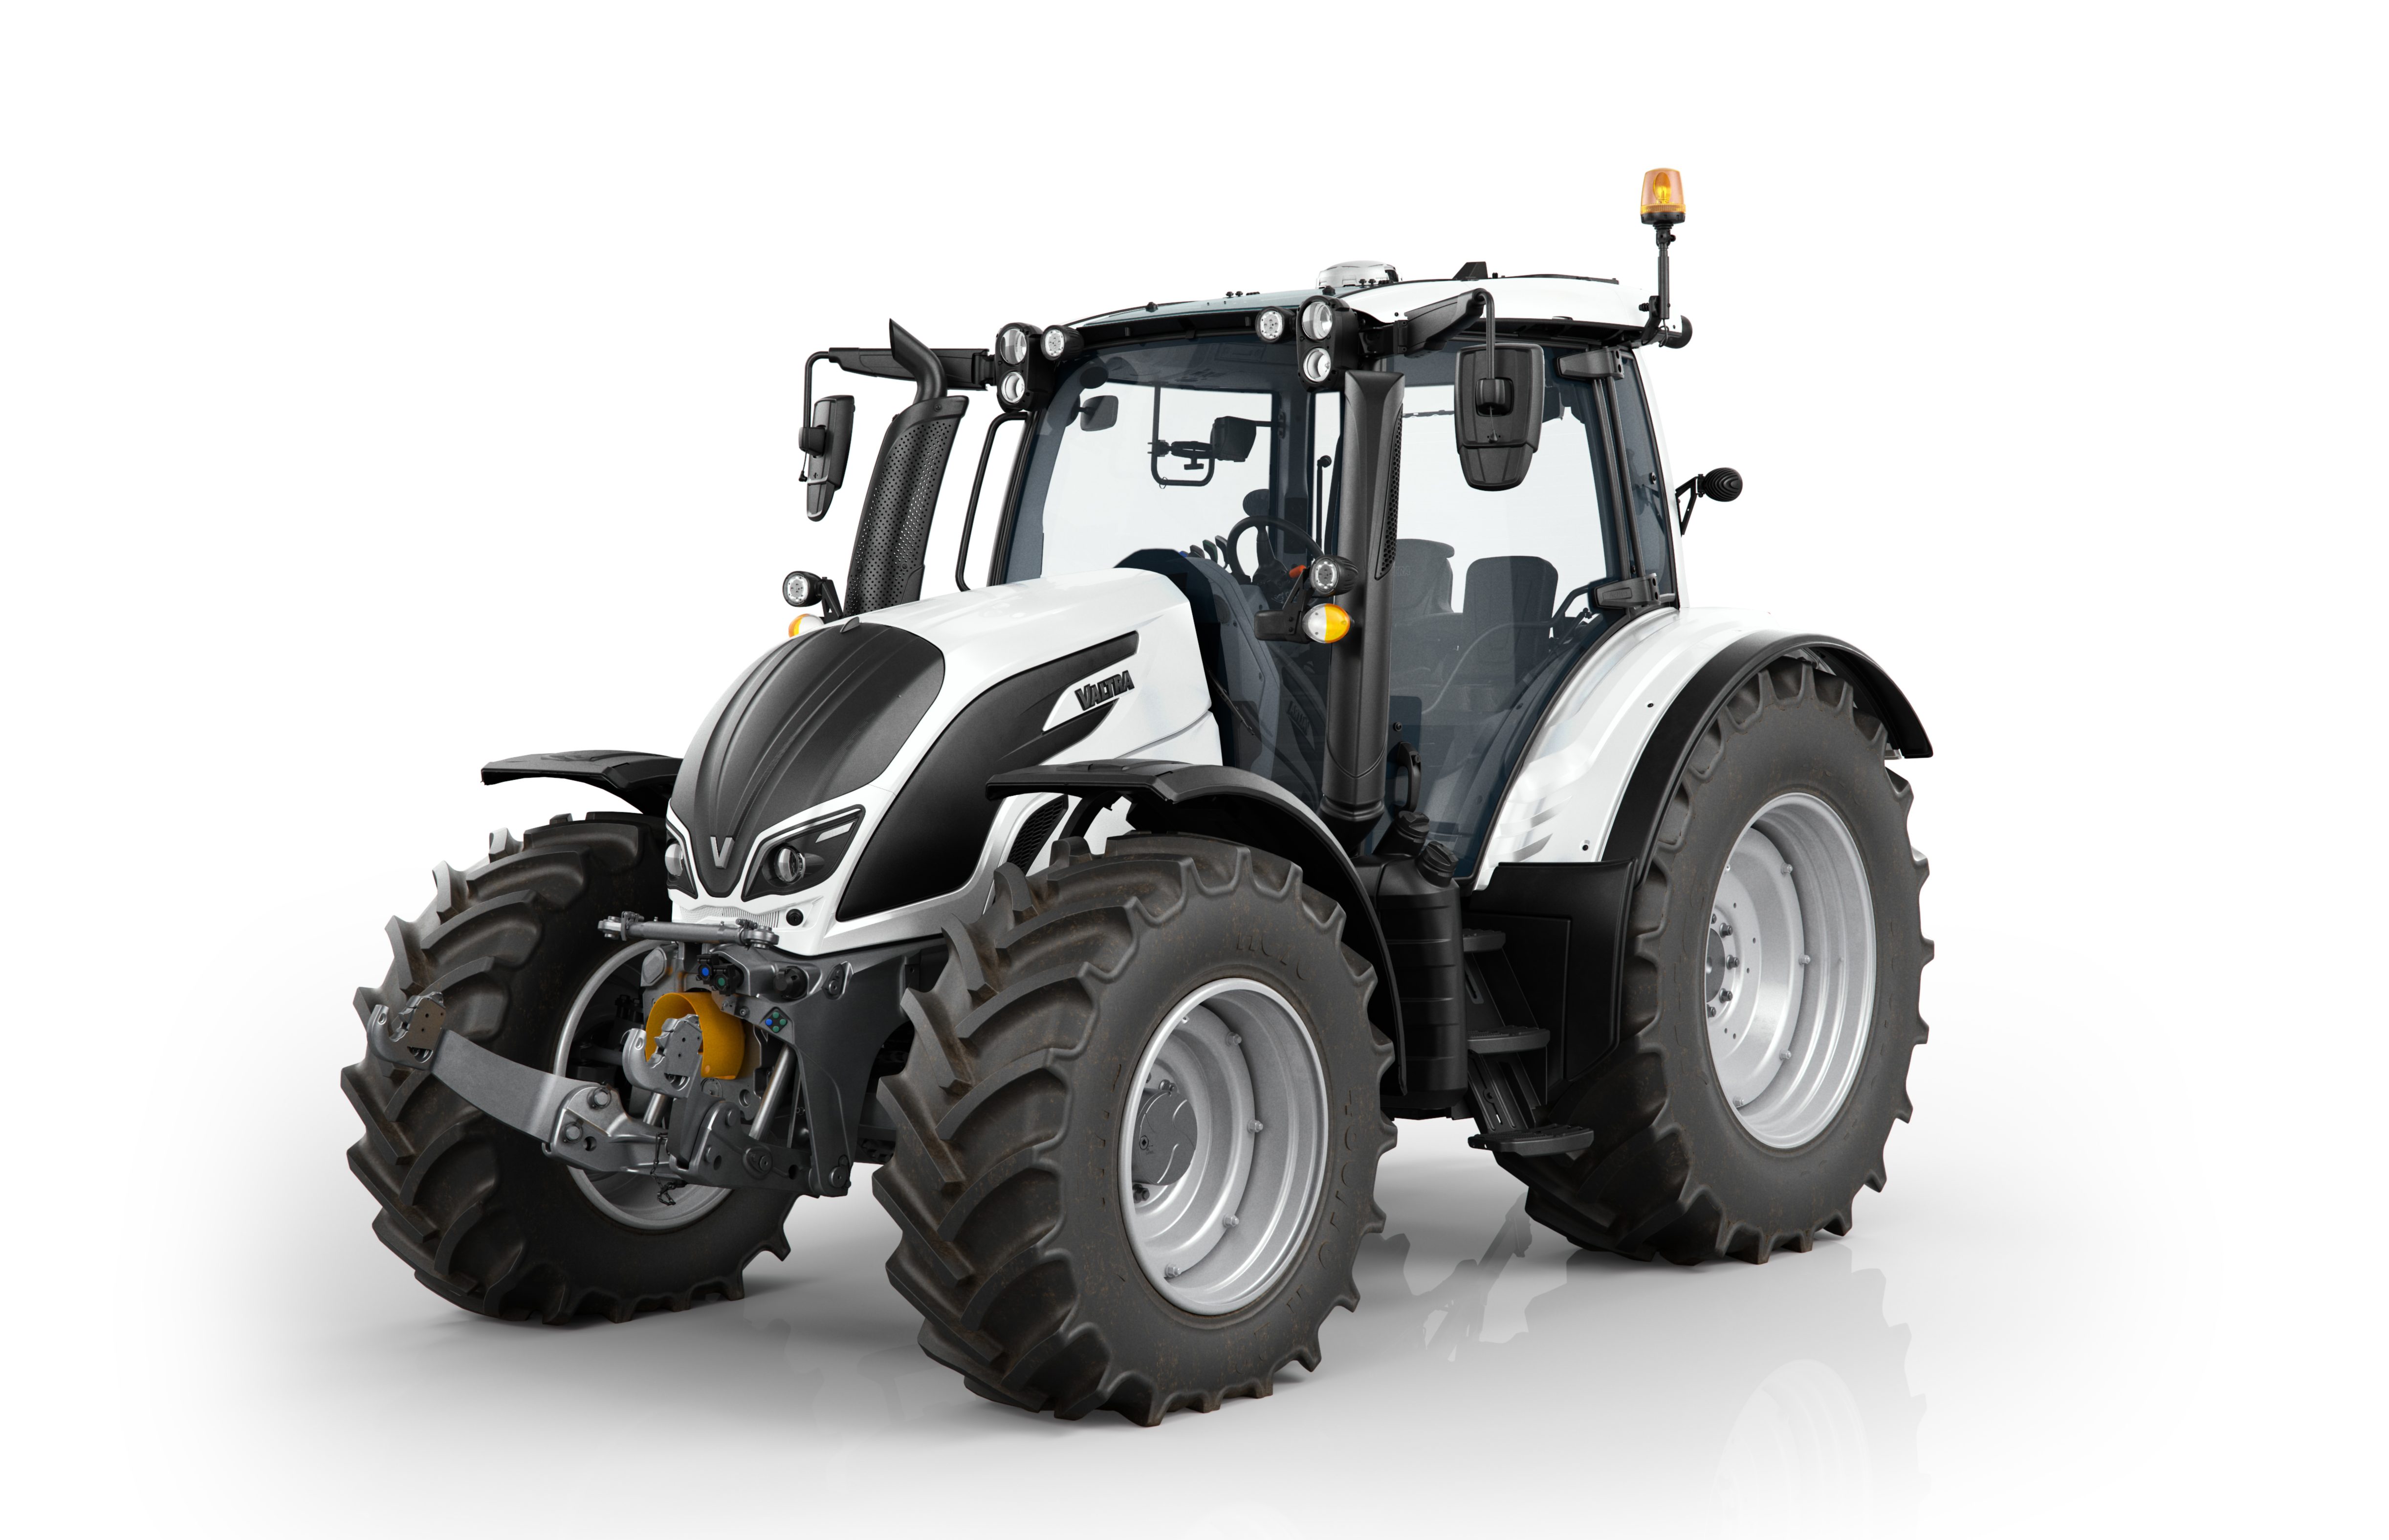 Hochwertige Tuning Fil Valtra Tractor T 151 6-6600 CR Sisu Power 160hp